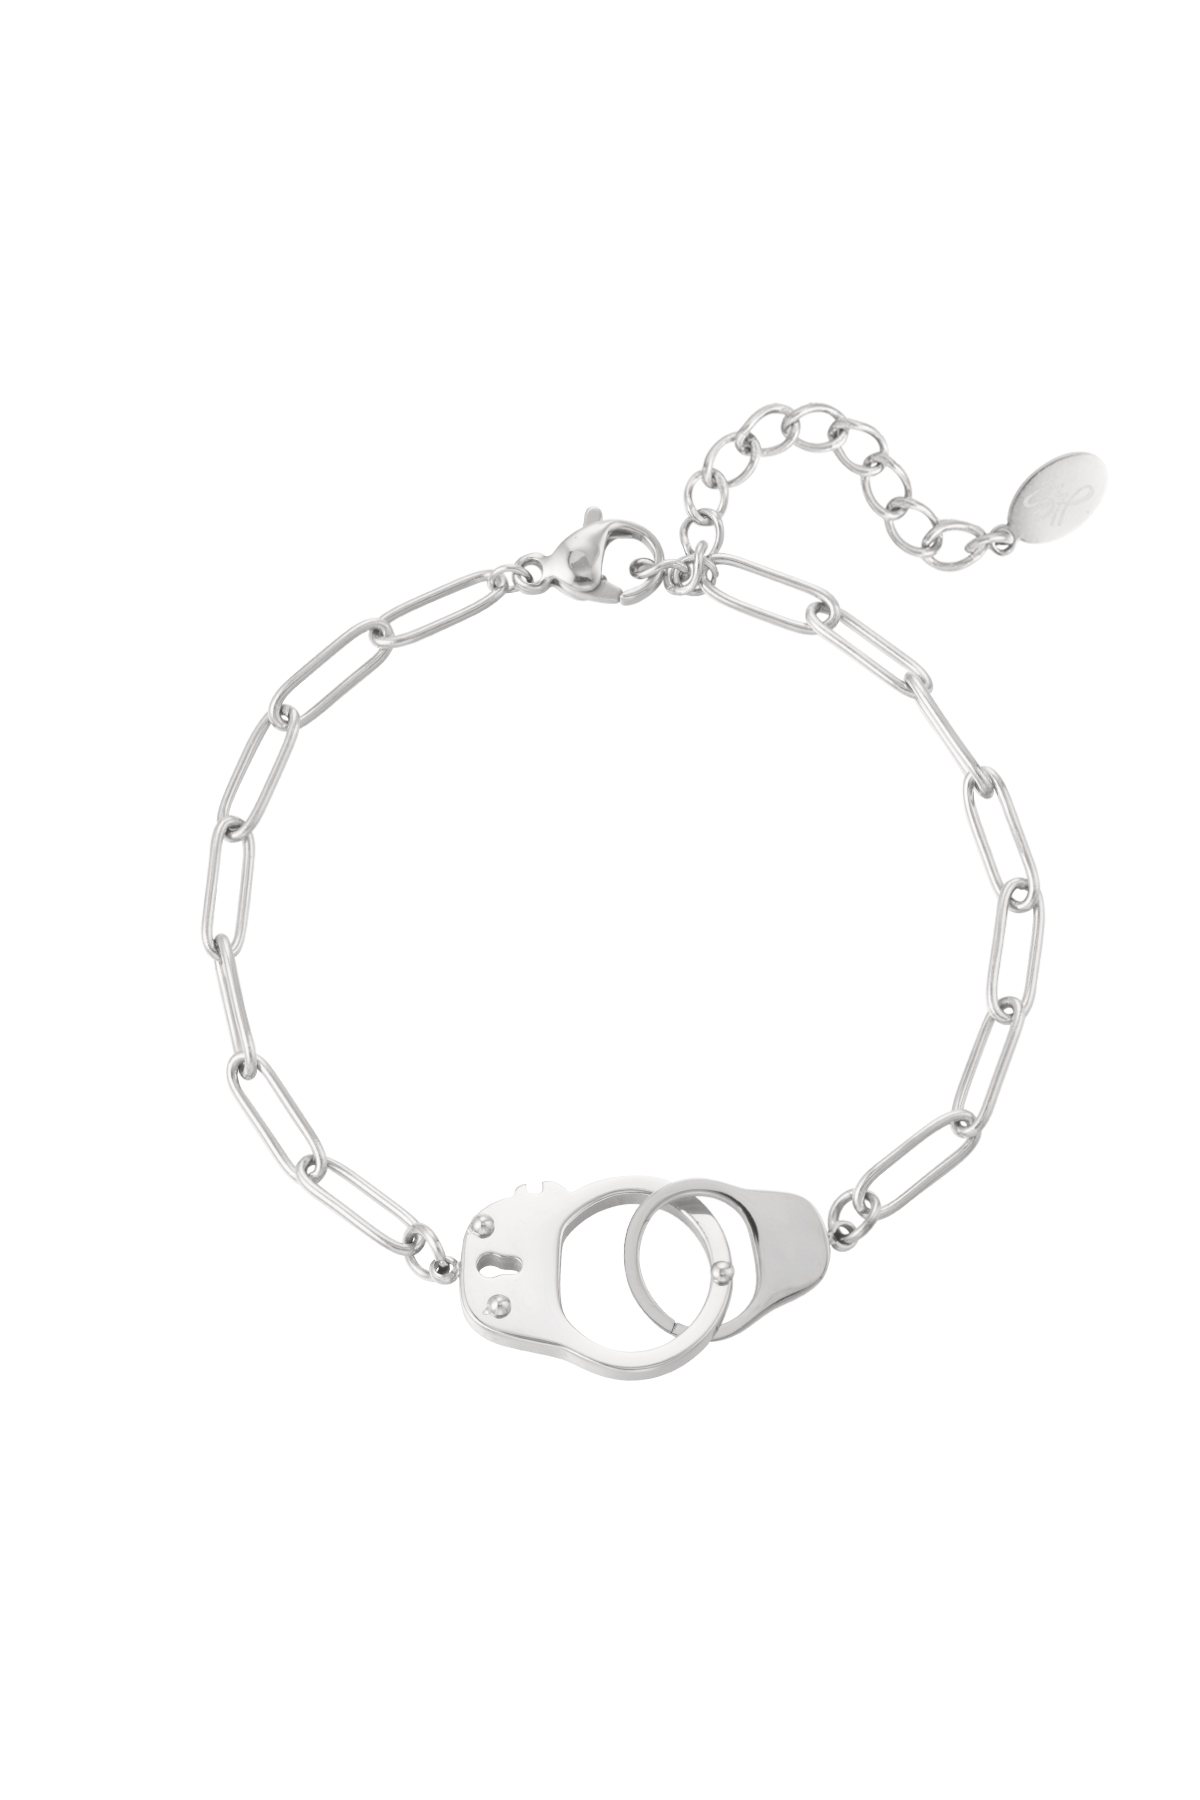 Crocheted link bracelet - silver h5 